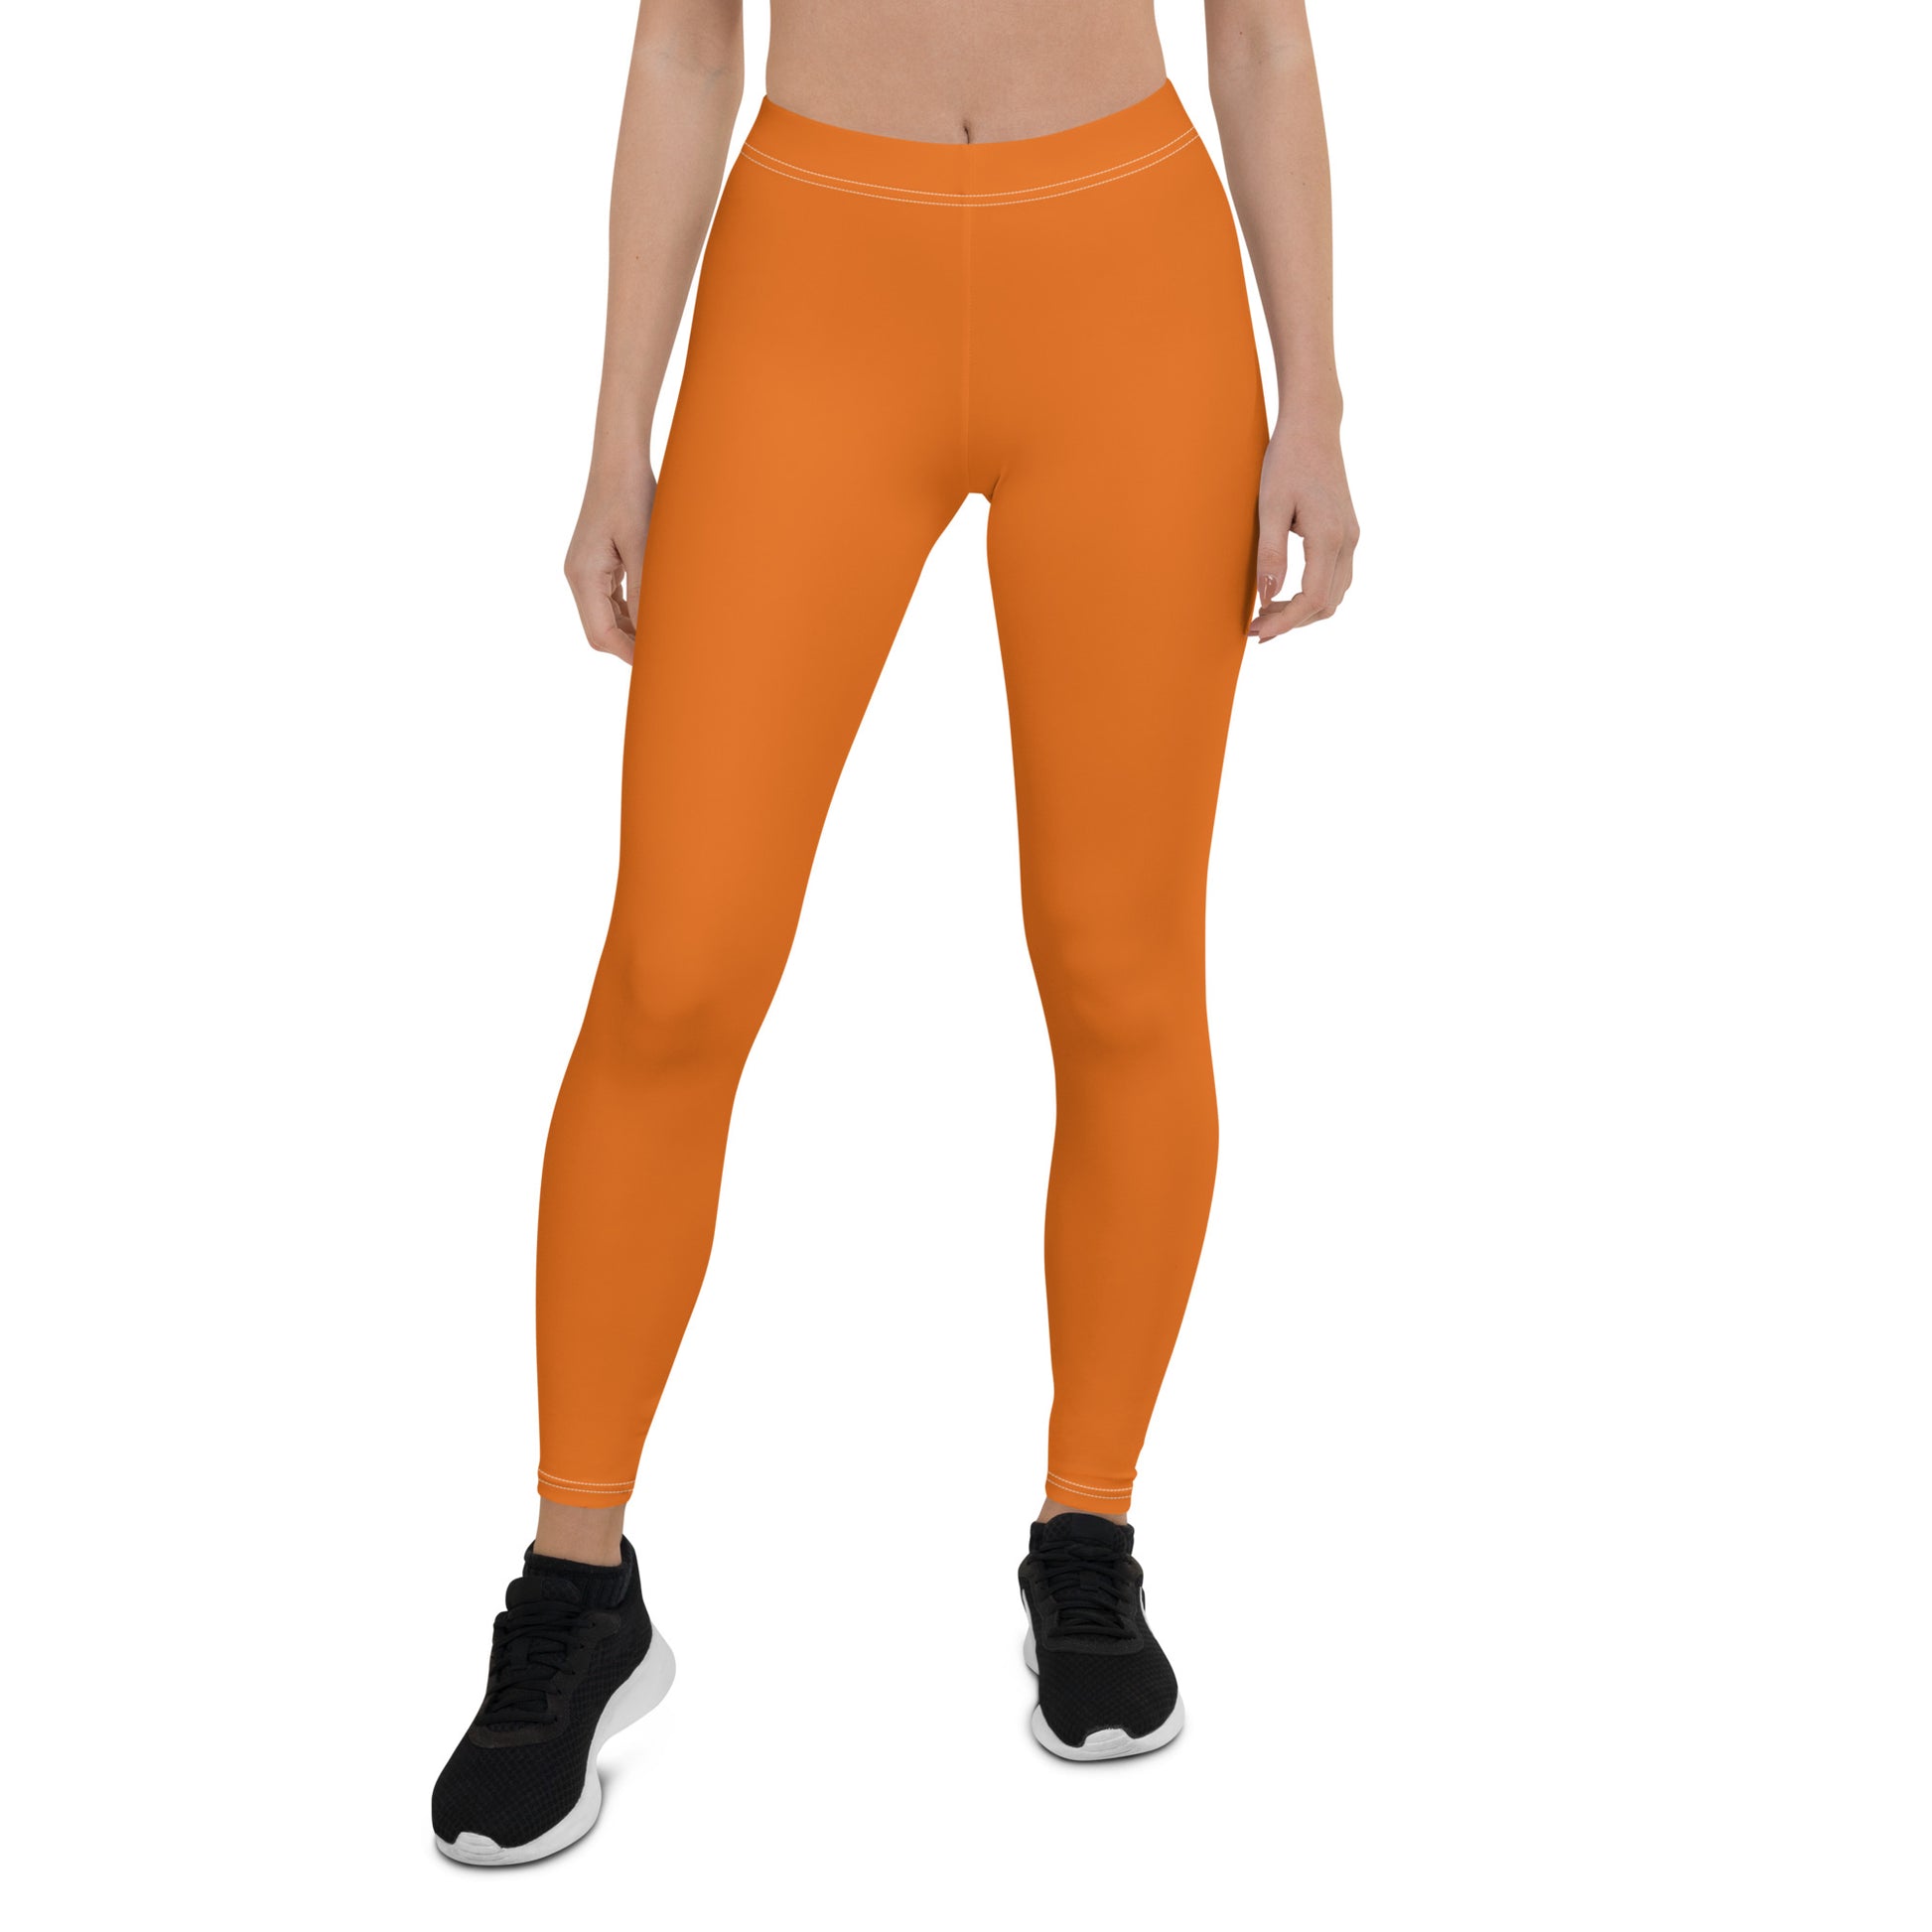 Humble Sportswear, women’s color match leggings, women’s leggings, 7/8th length leggings, women’s spandex leggings